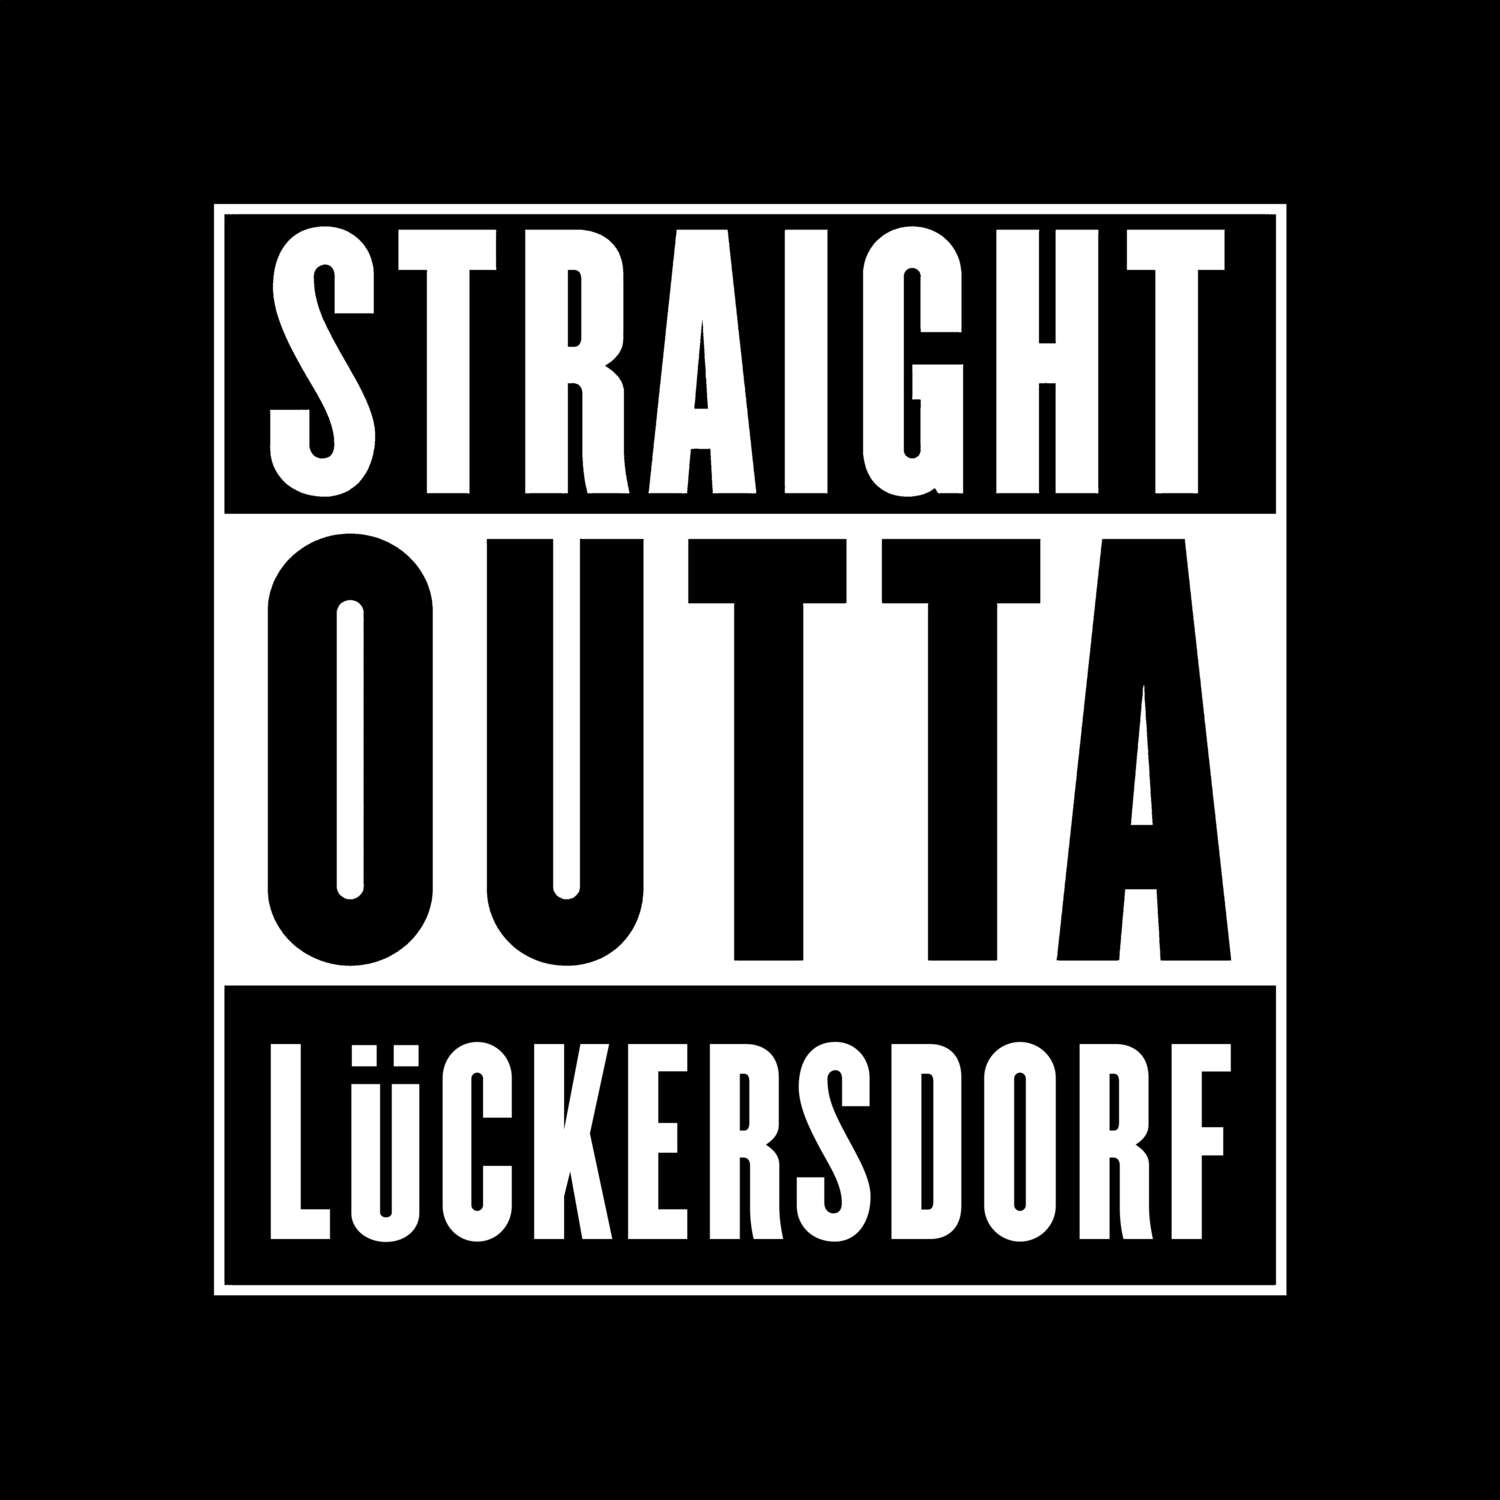 Lückersdorf T-Shirt »Straight Outta«